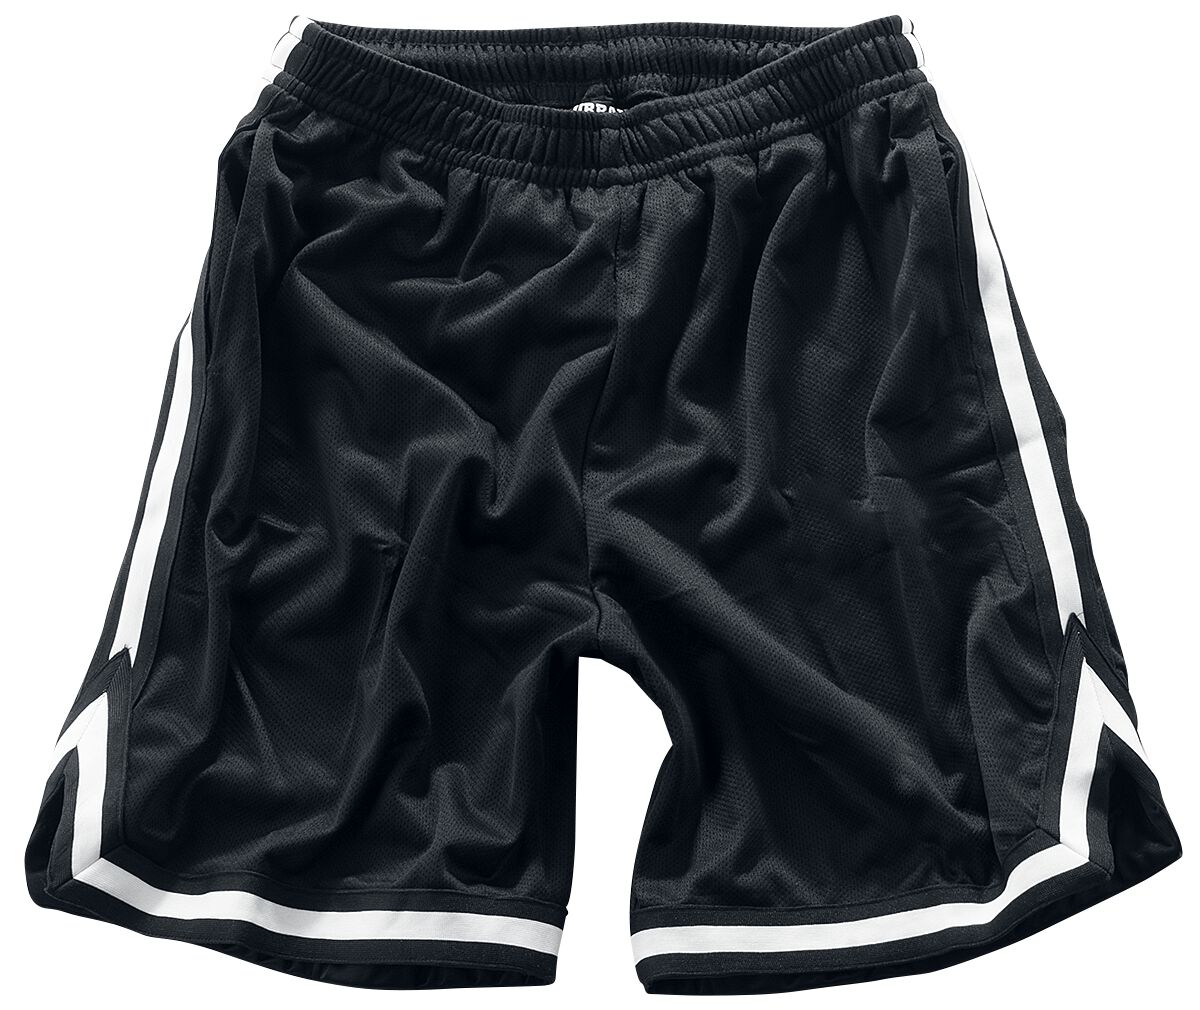 Urban Classics Stripes Mesh Shorts Short schwarz weiß in 3XL